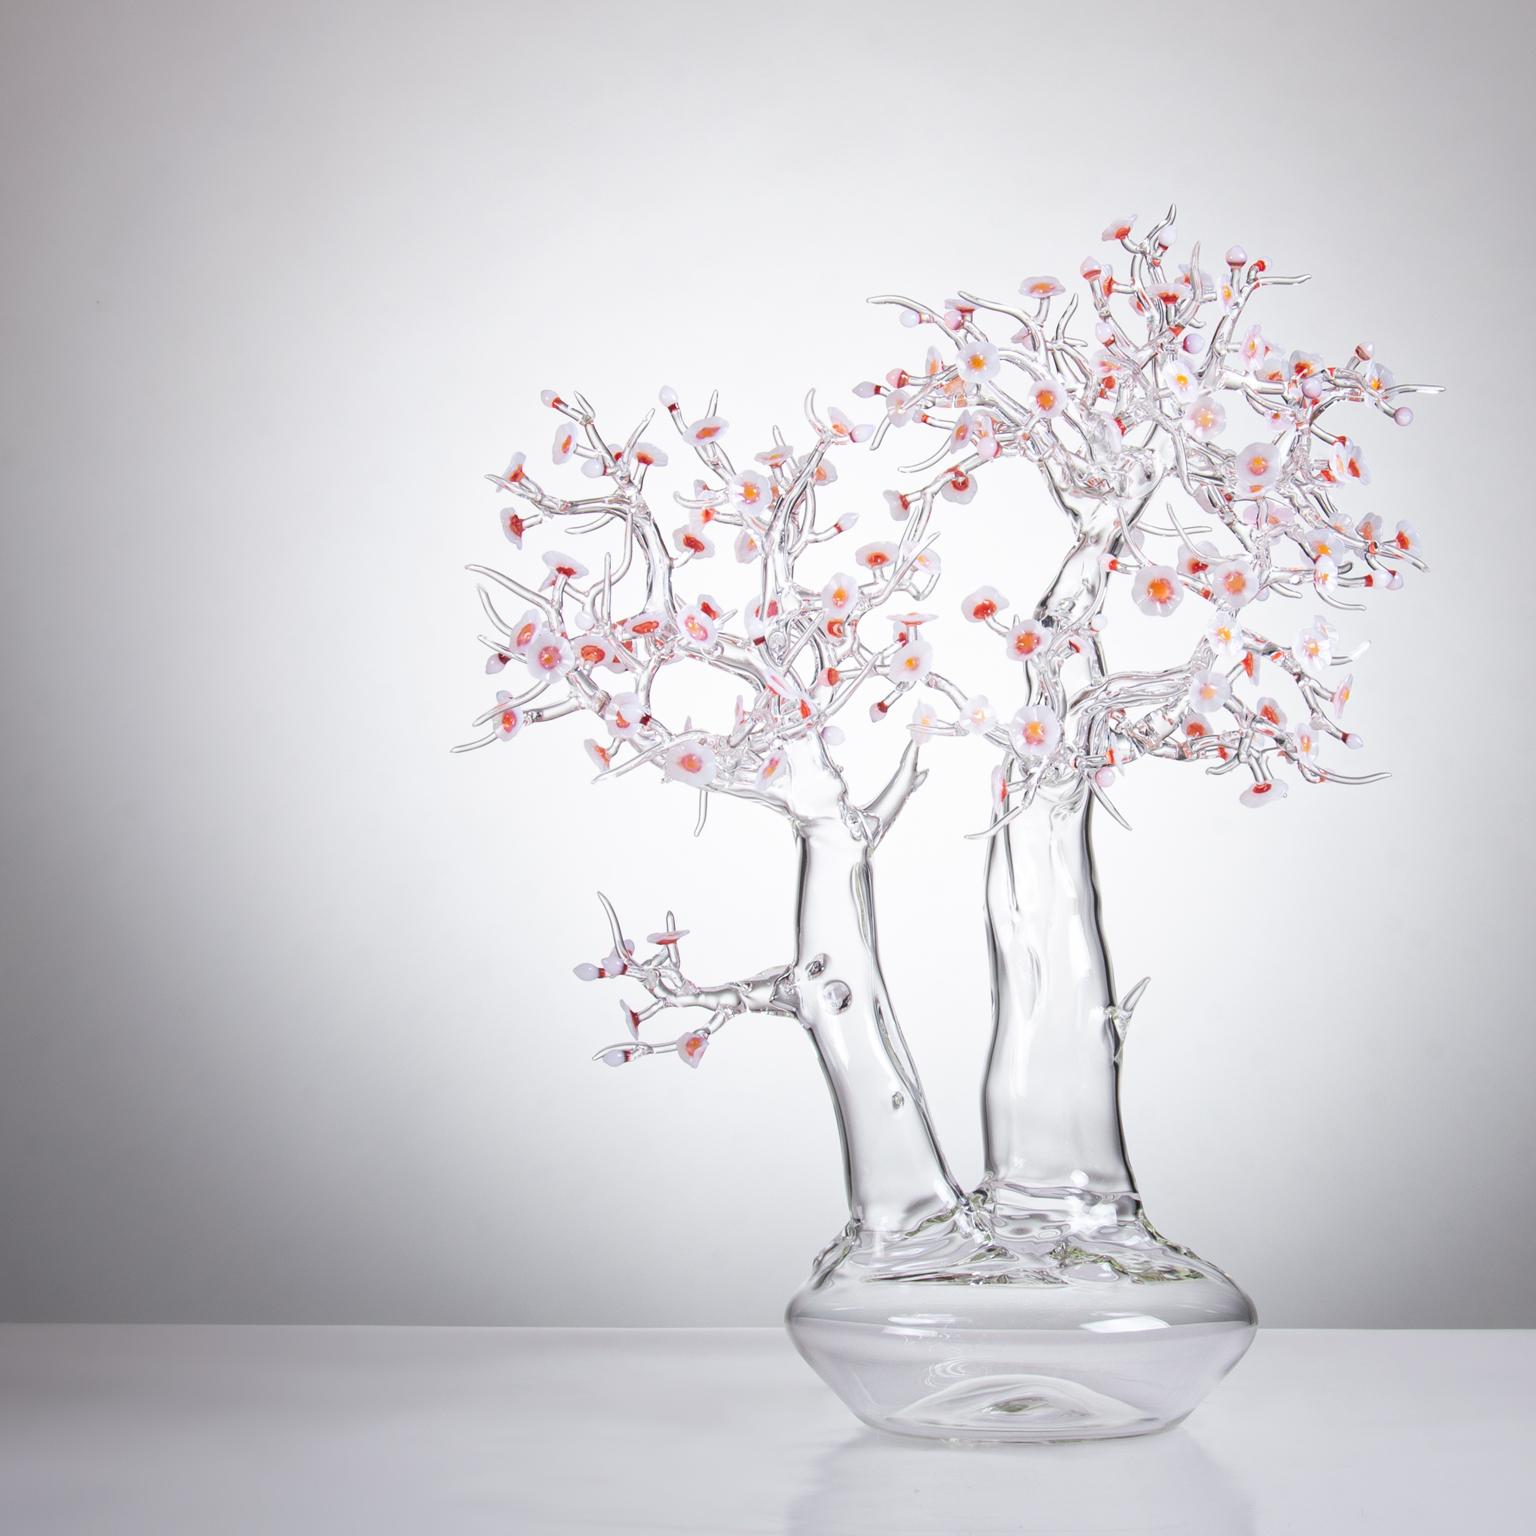 Hand blown glass sculpture representing a bonsai tree in blossom.

Artist: Simone Crestani
Material: borosilicate glass
Technique: flameworking
Unique piece
Year: 2019
Measures: Height 23.2”, width 18.1